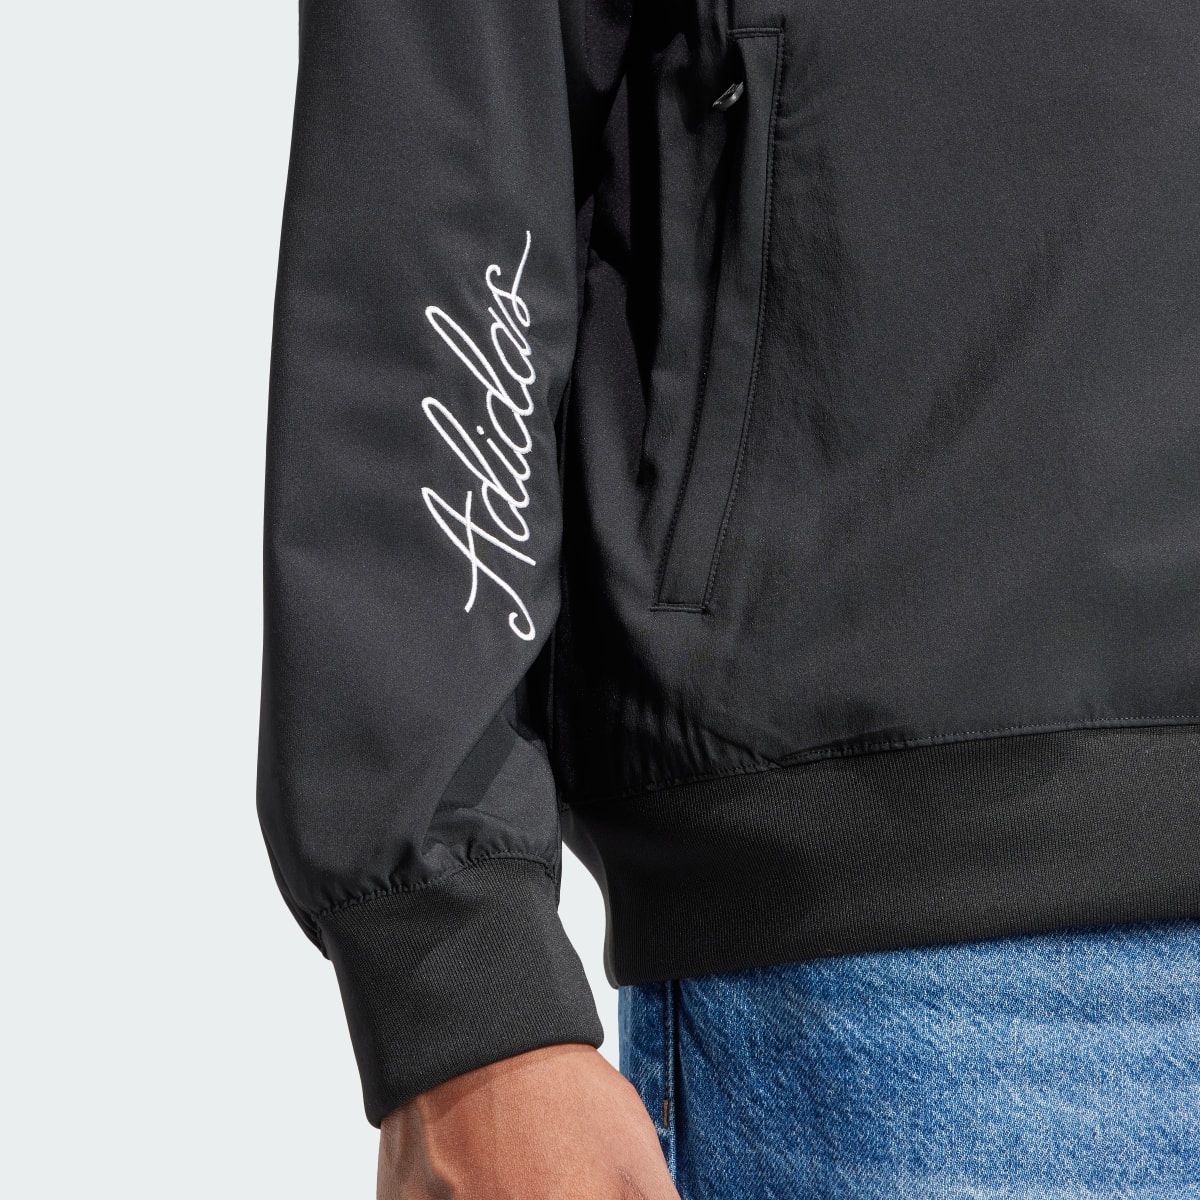 Adidas Scribble Jacket. 7